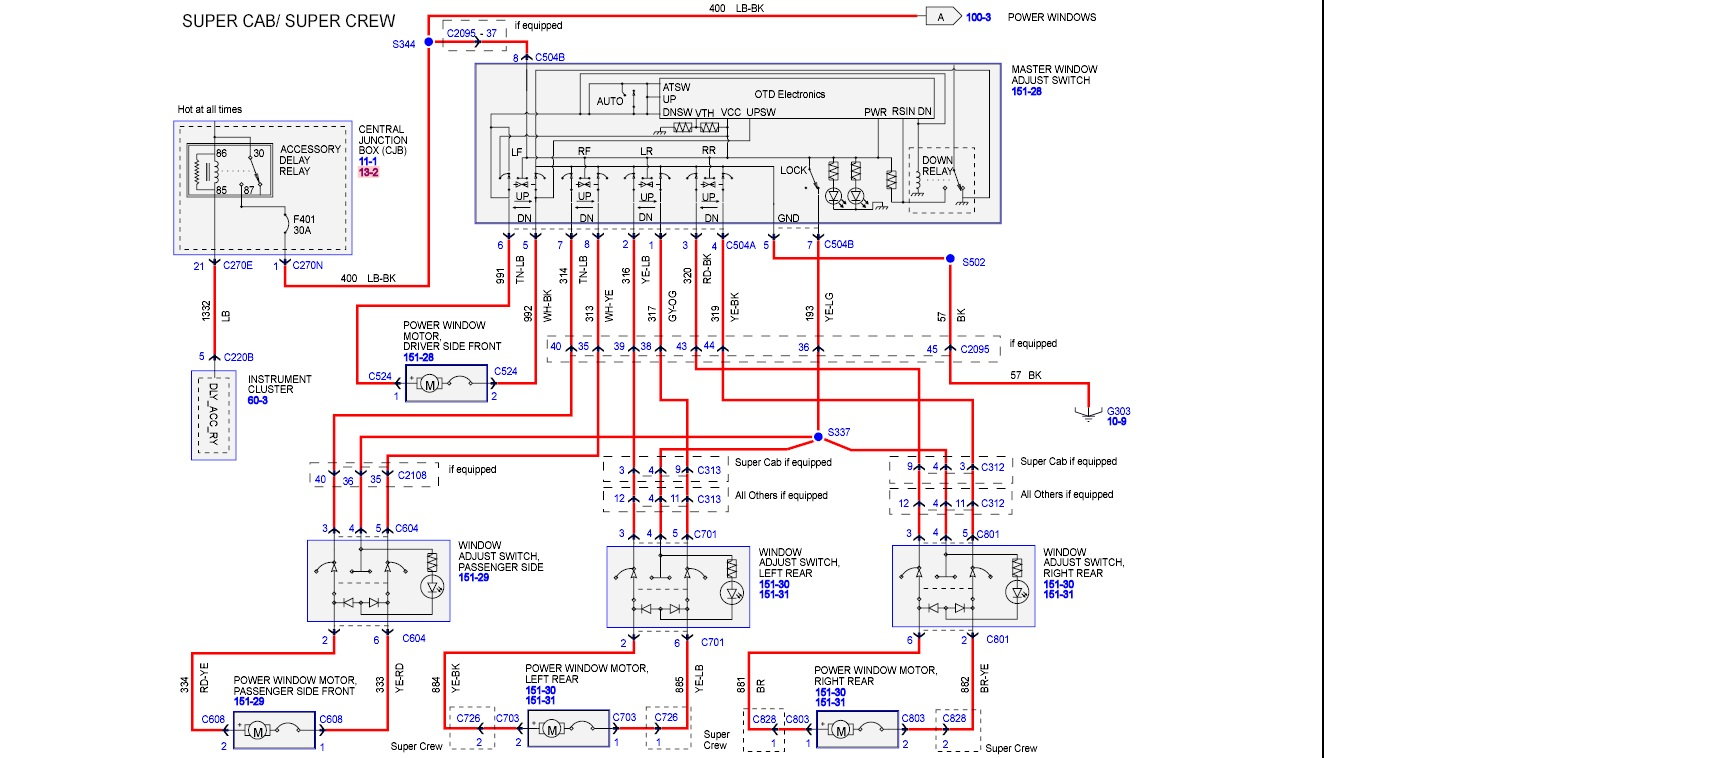 Power Window Switch Wiring Diagram from cimg8.ibsrv.net